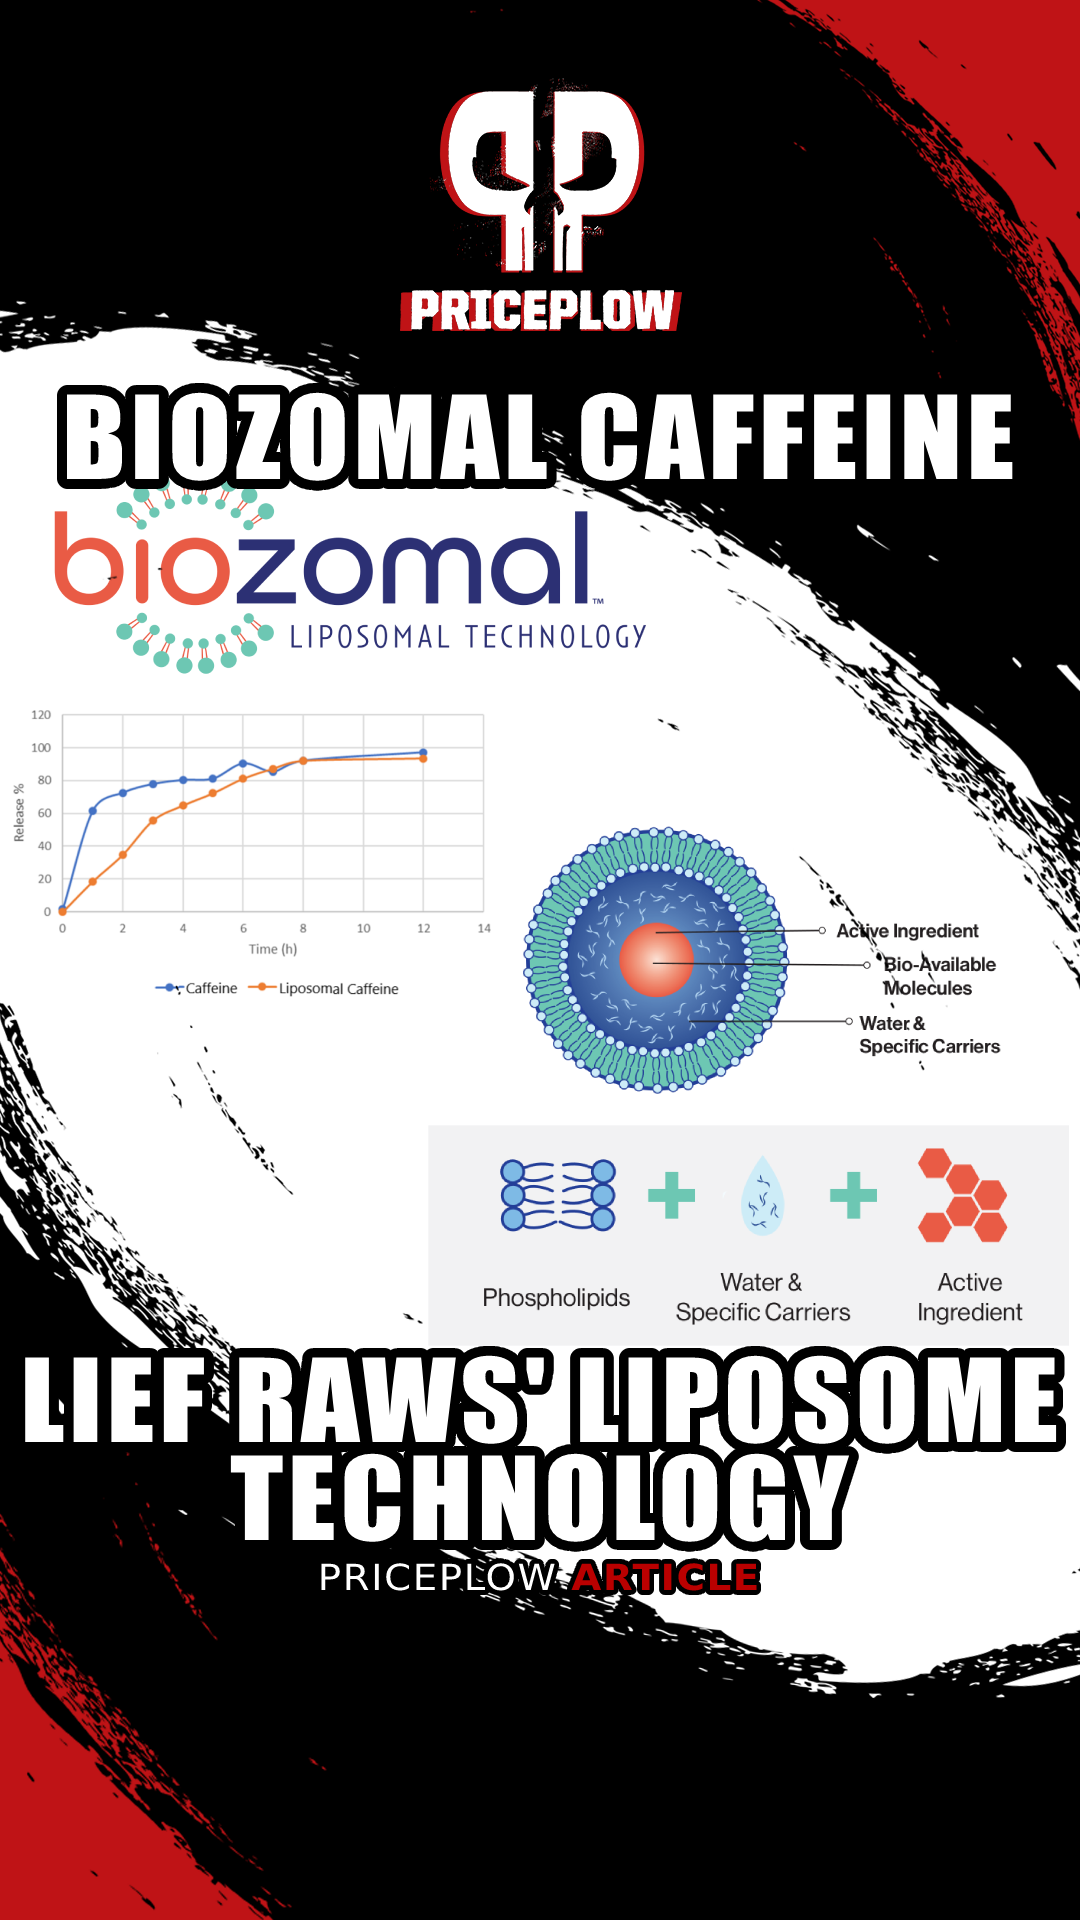 Lief Raws Biozomal Caffeine